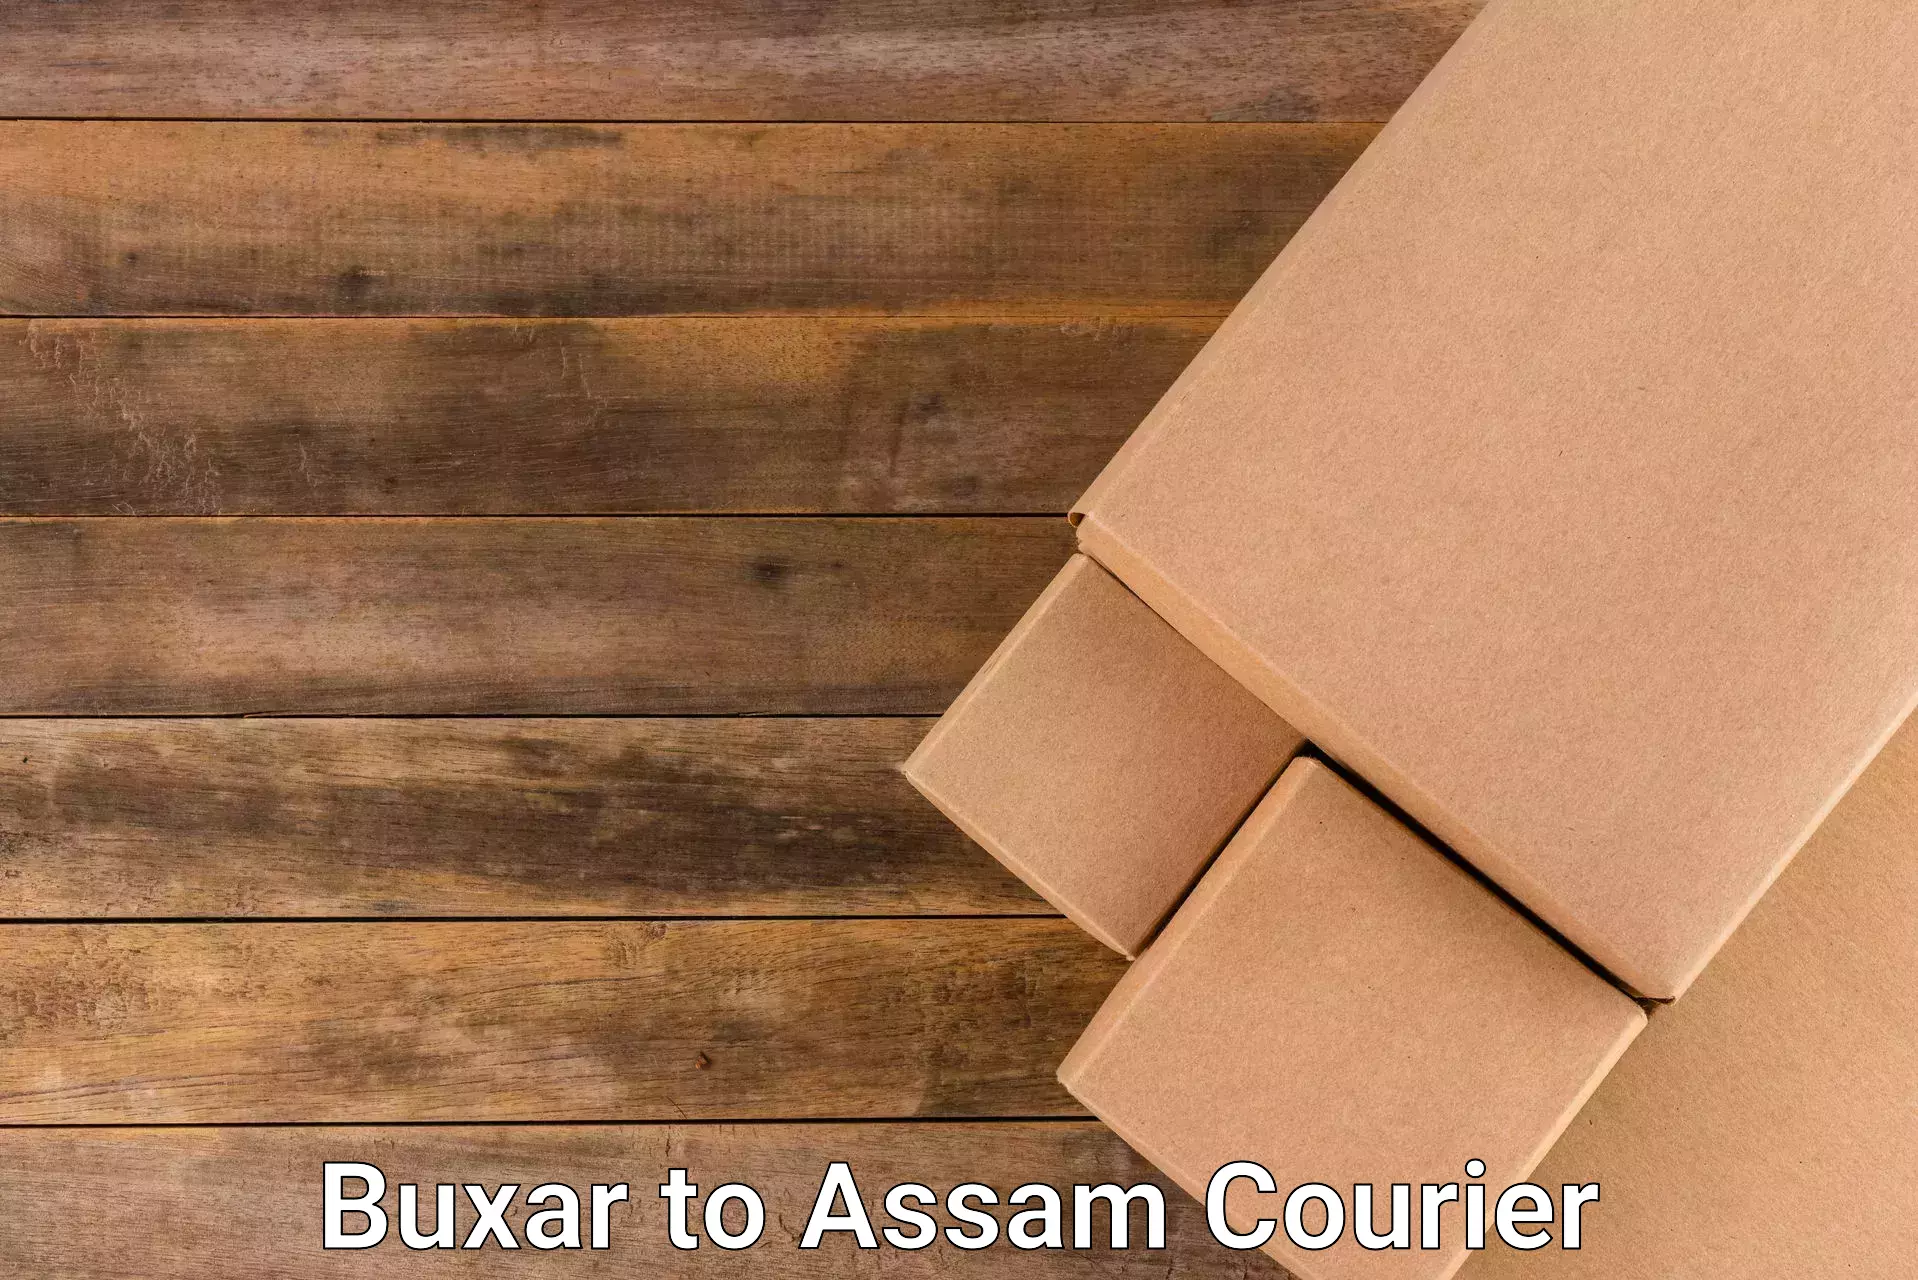 Courier service efficiency Buxar to Lalapur Hailakandi